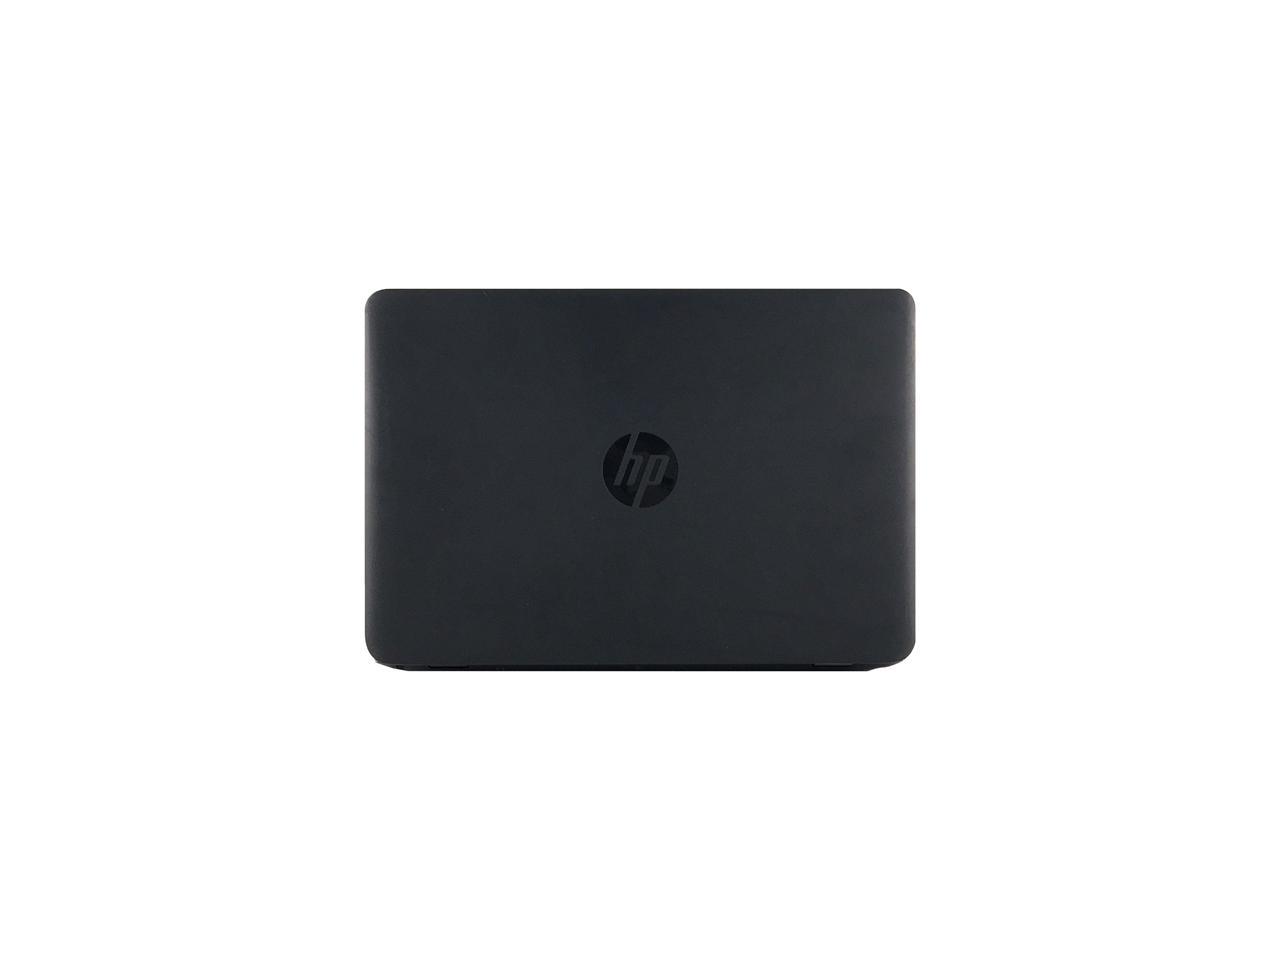 HP A Grade Laptop EliteBook 840 G2 Intel Core i5 5th Gen 5300U (2.30 GHz) 8 GB Memory 500 GB HDD Intel HD Graphics 5500 14.0" Windows 10 Pro 64-Bit (Multi-Language Support English / Spanish)